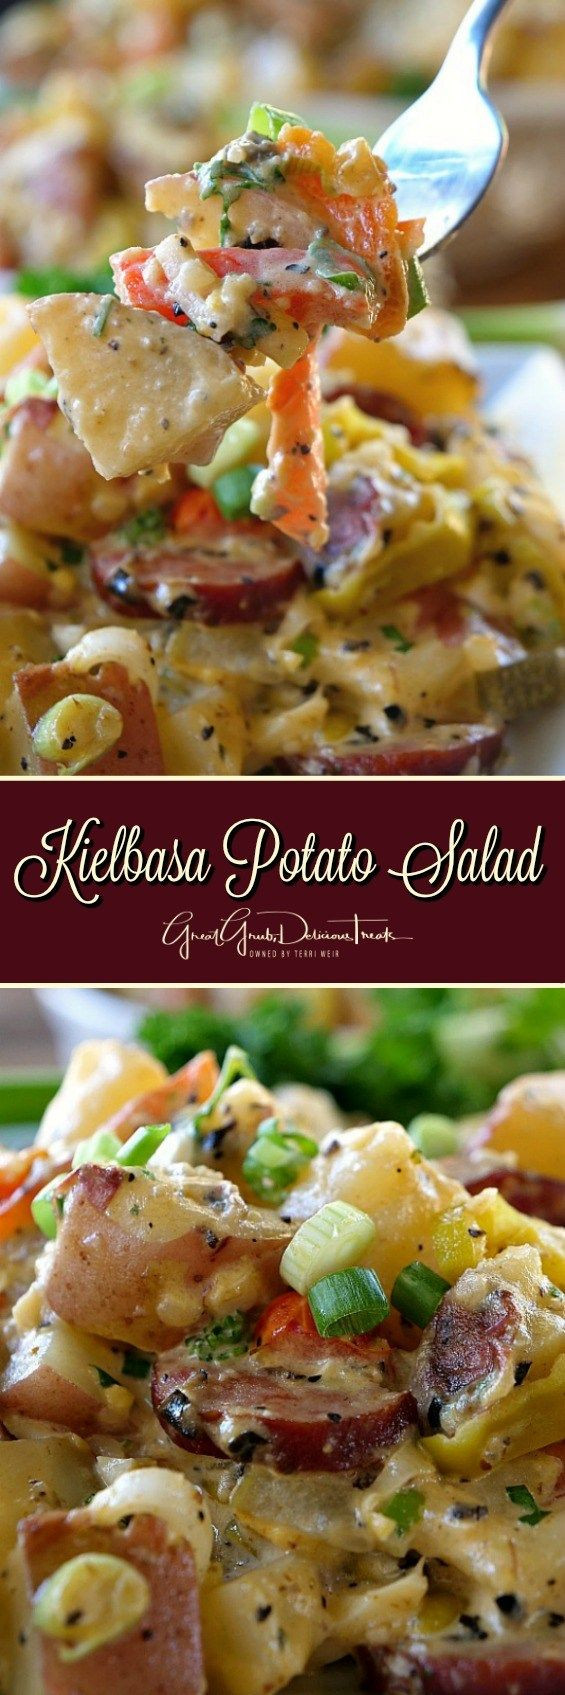 Side Dishes For Kielbasa
 Kielbasa Potato Salad